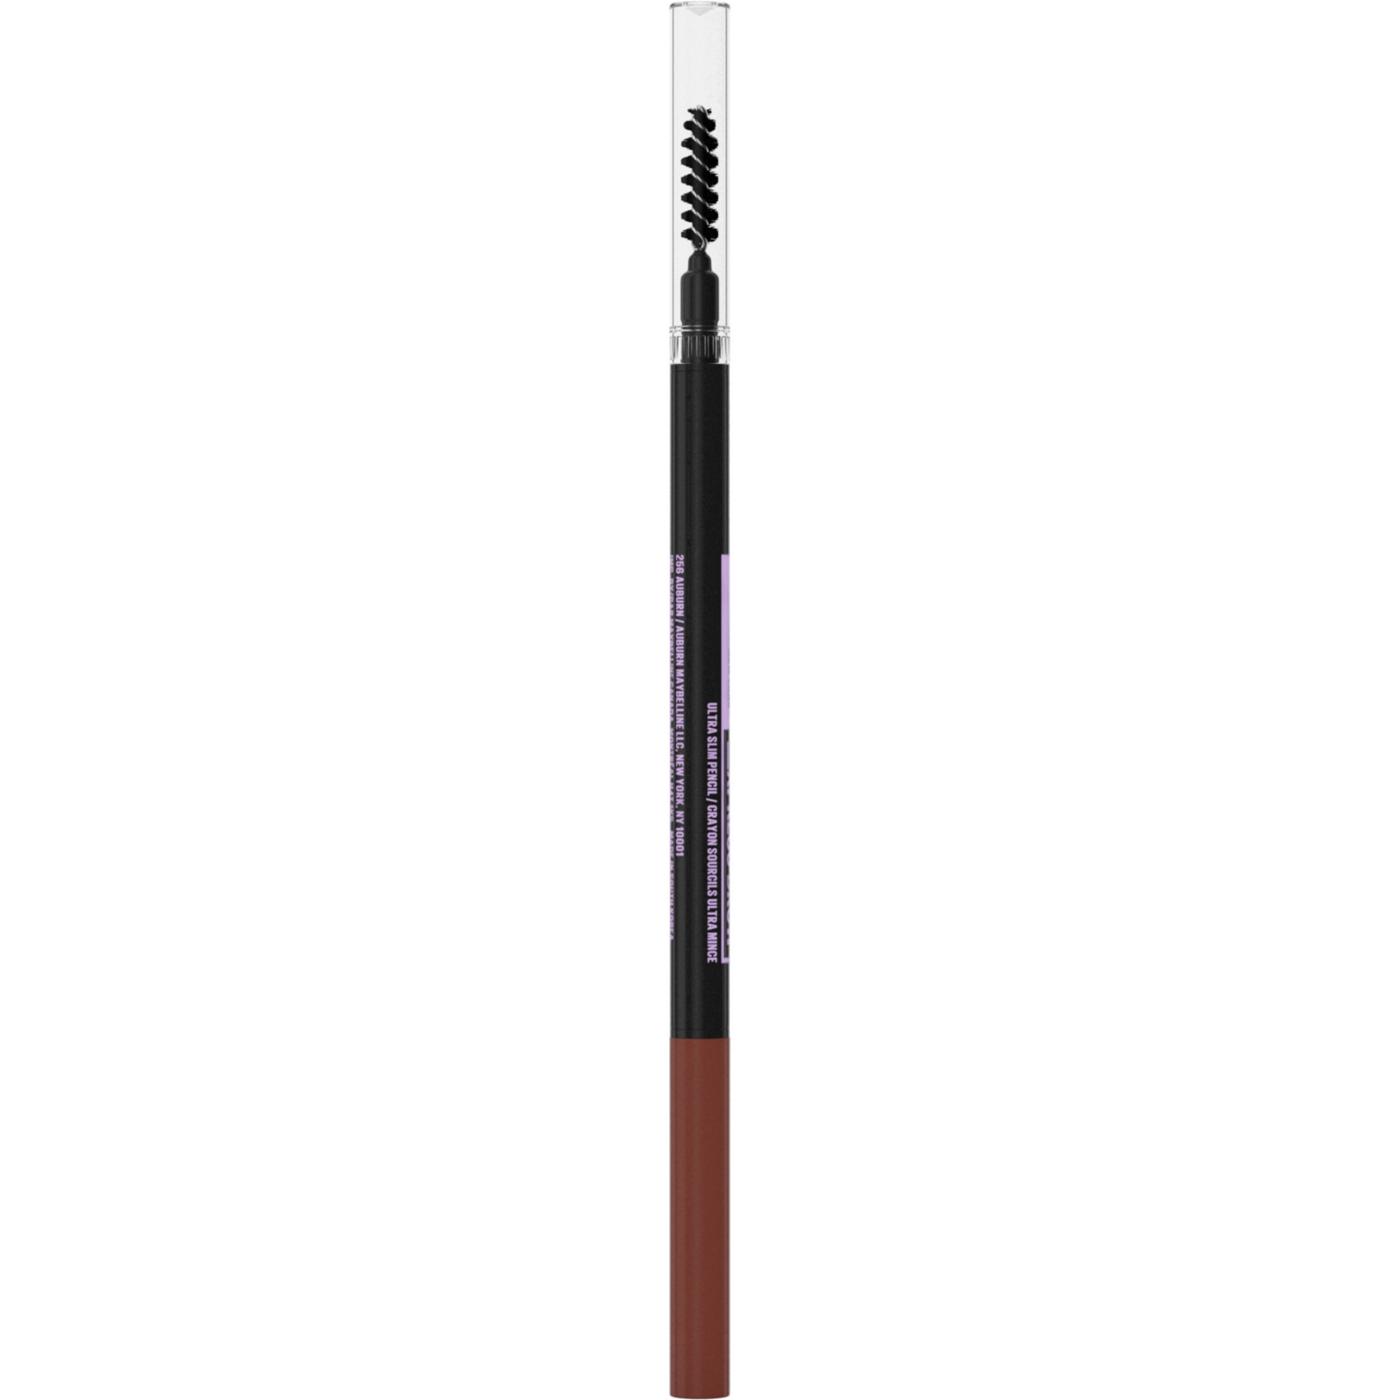 Maybelline Express Brow Ultra Slim Pencil - Auburn; image 4 of 6